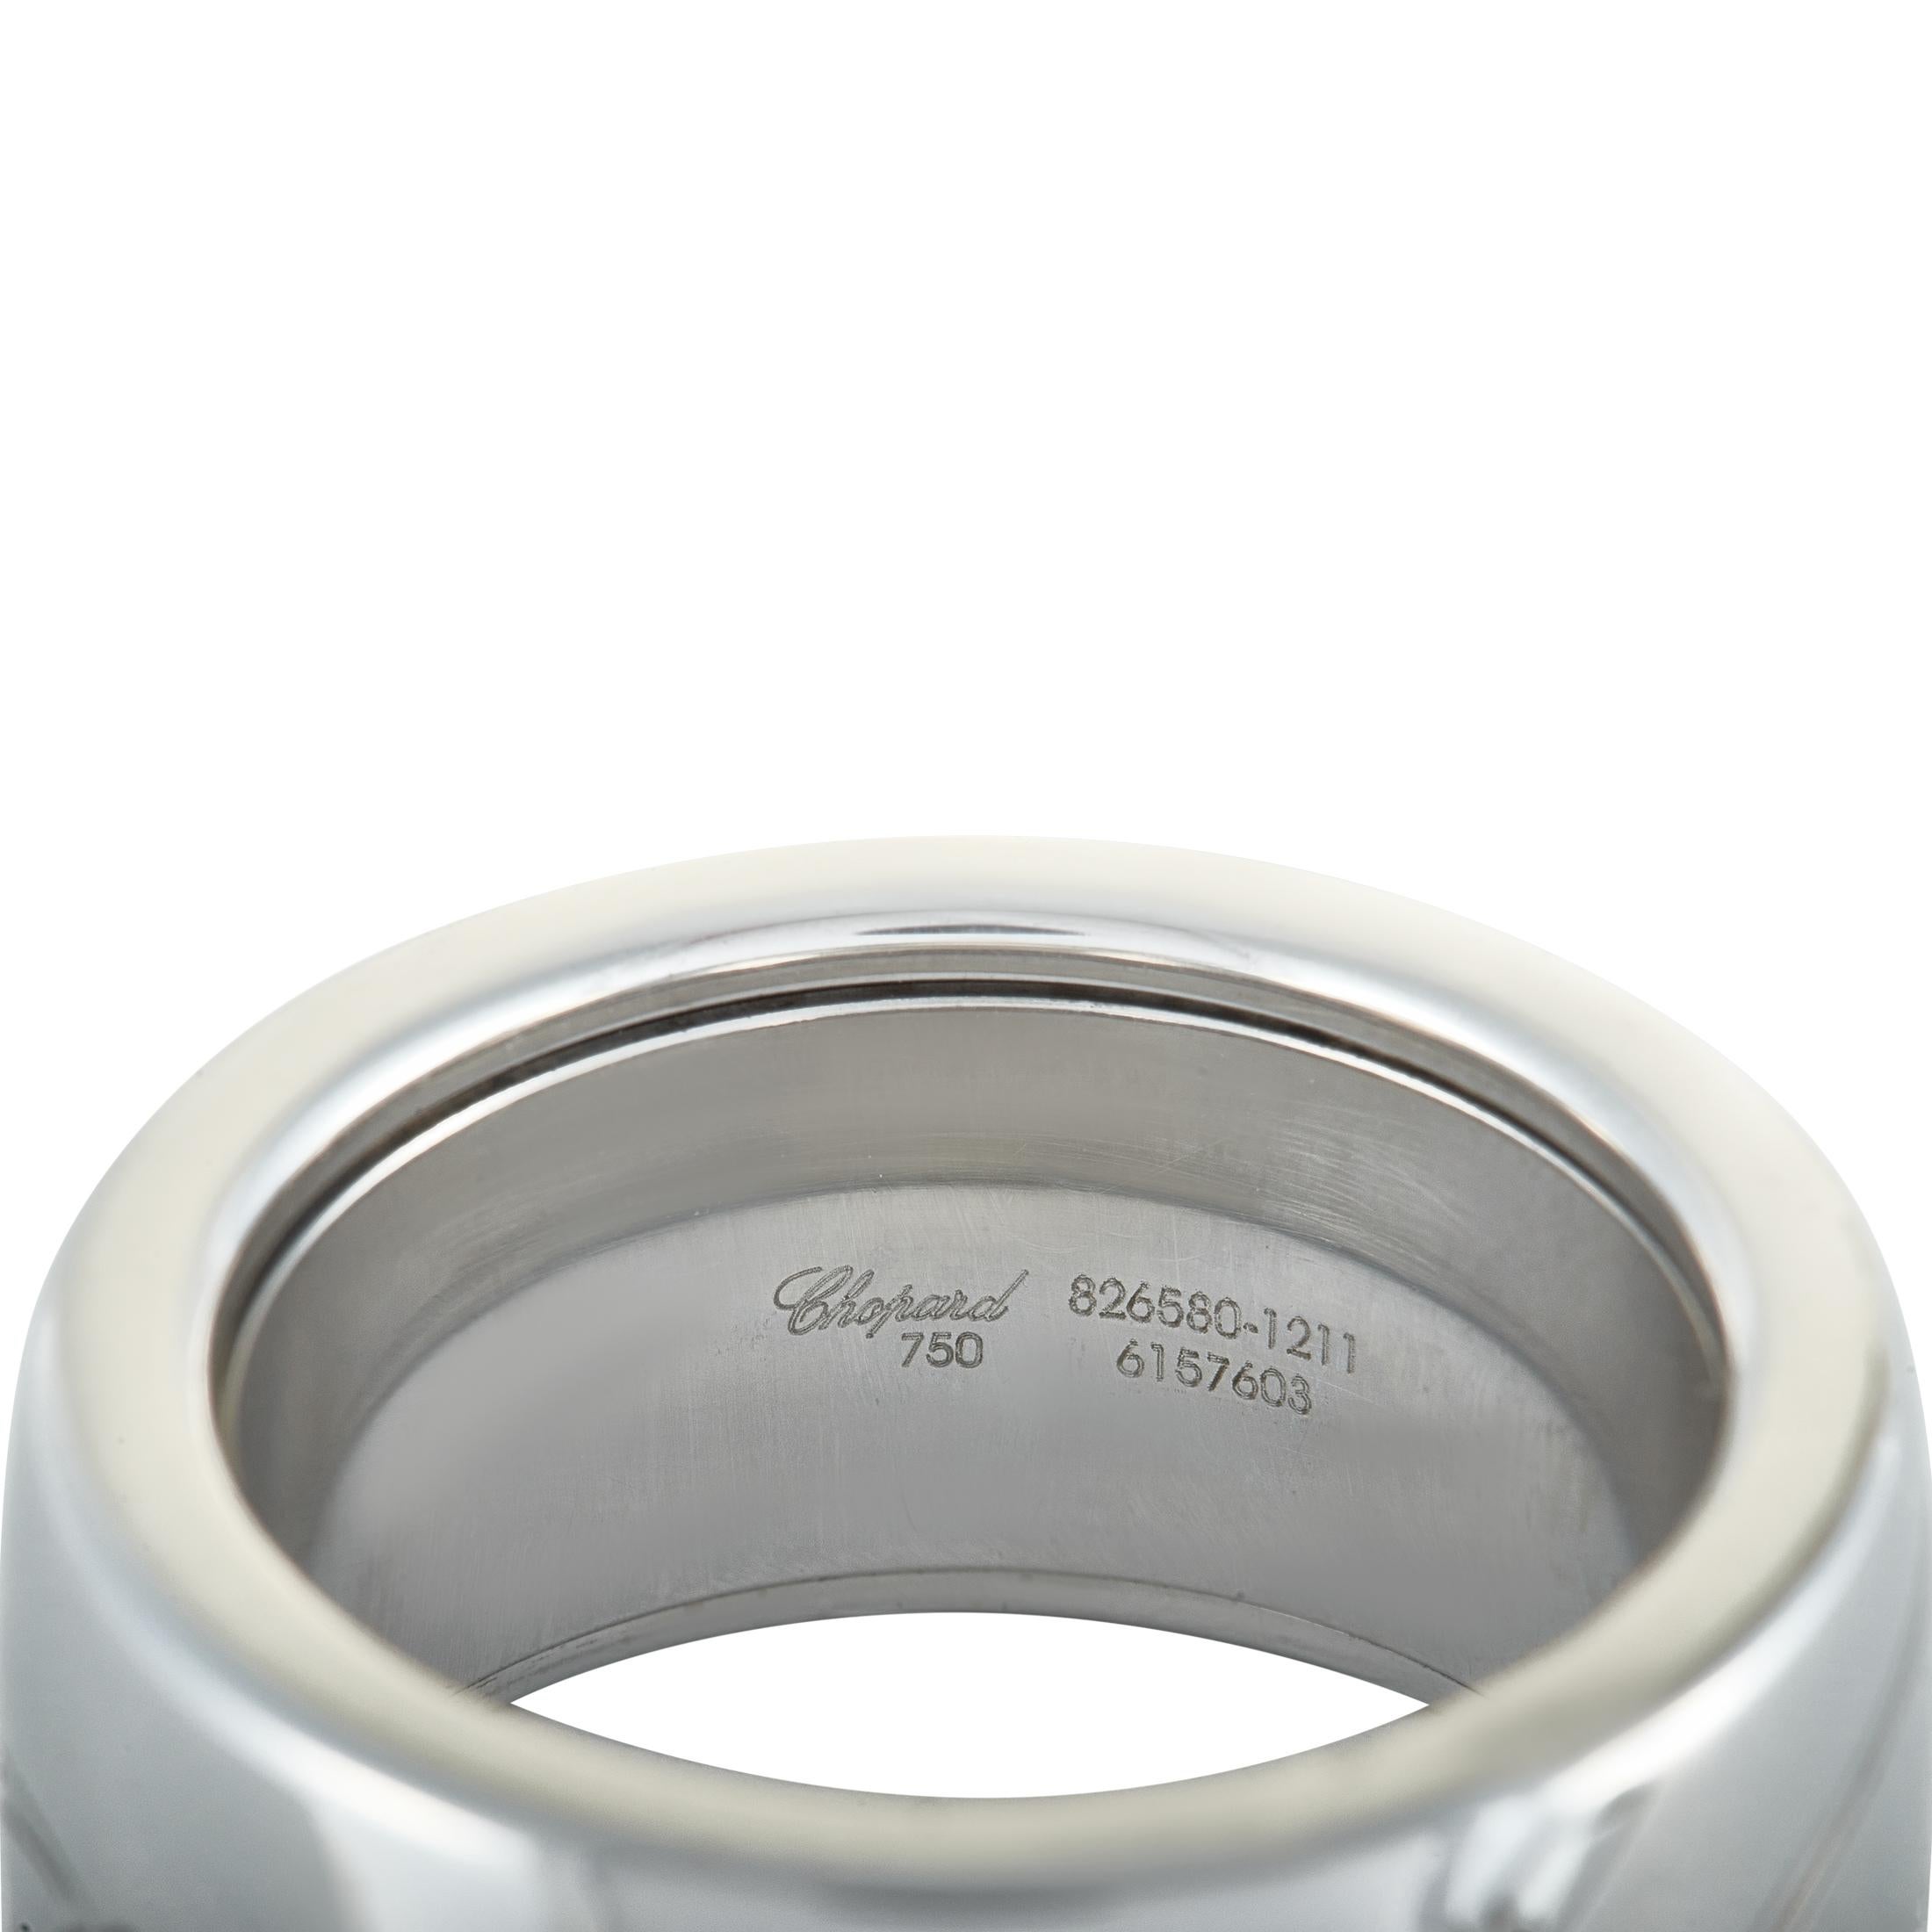 Women's Chopard Chopardissimo Diamond White Gold Signature Band Ring